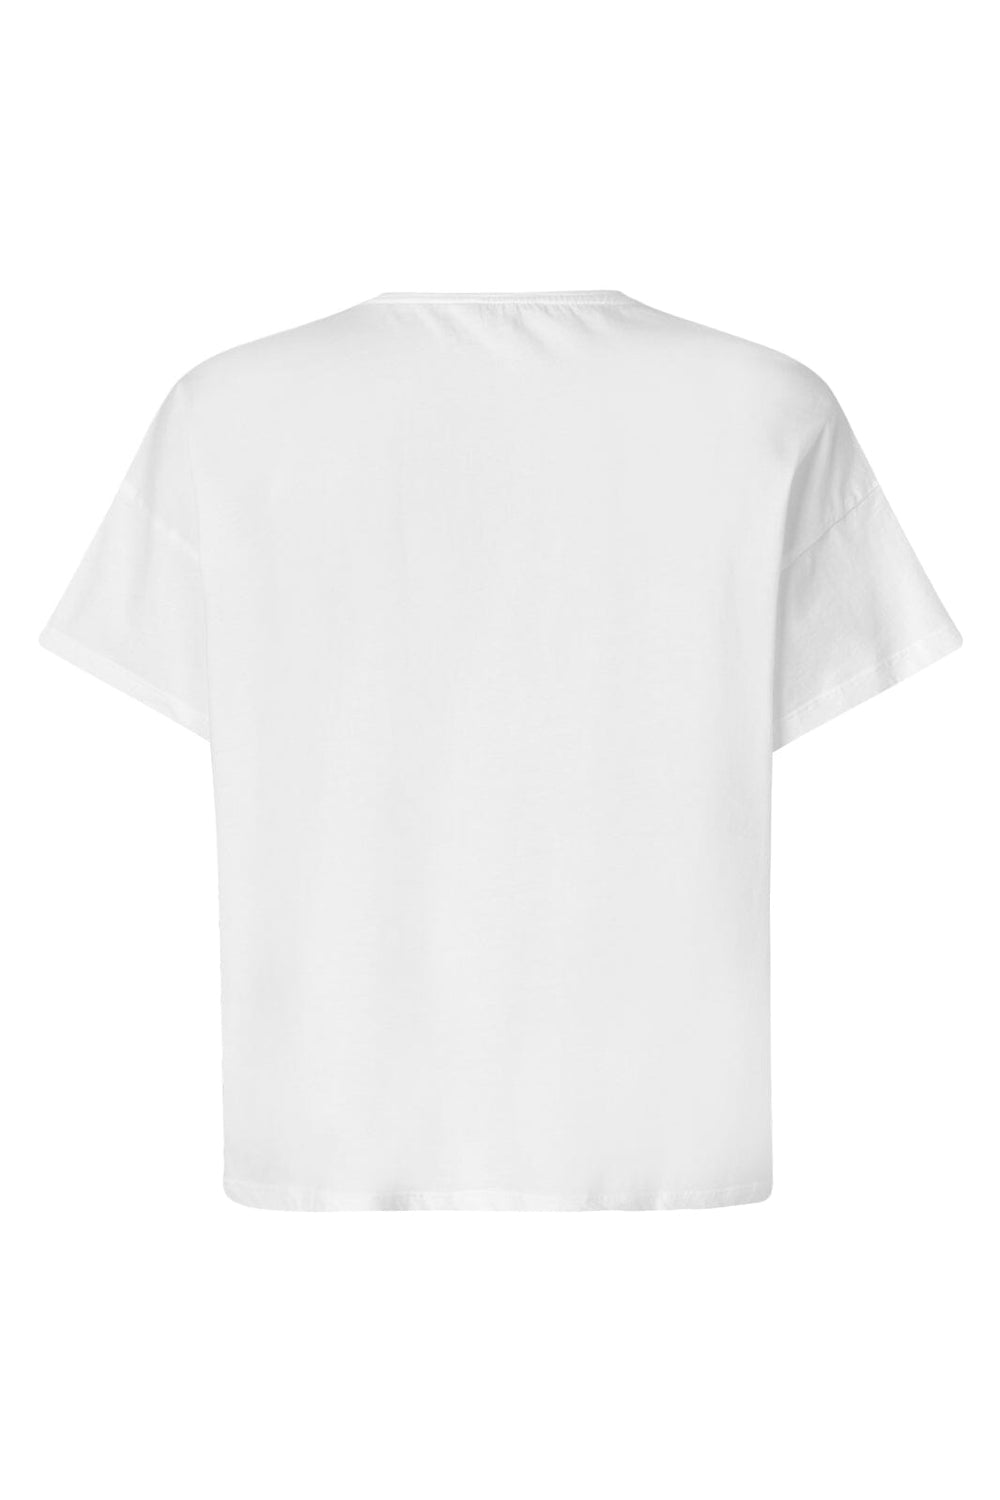 Mbym - Planet-M - 800 White T-shirts 